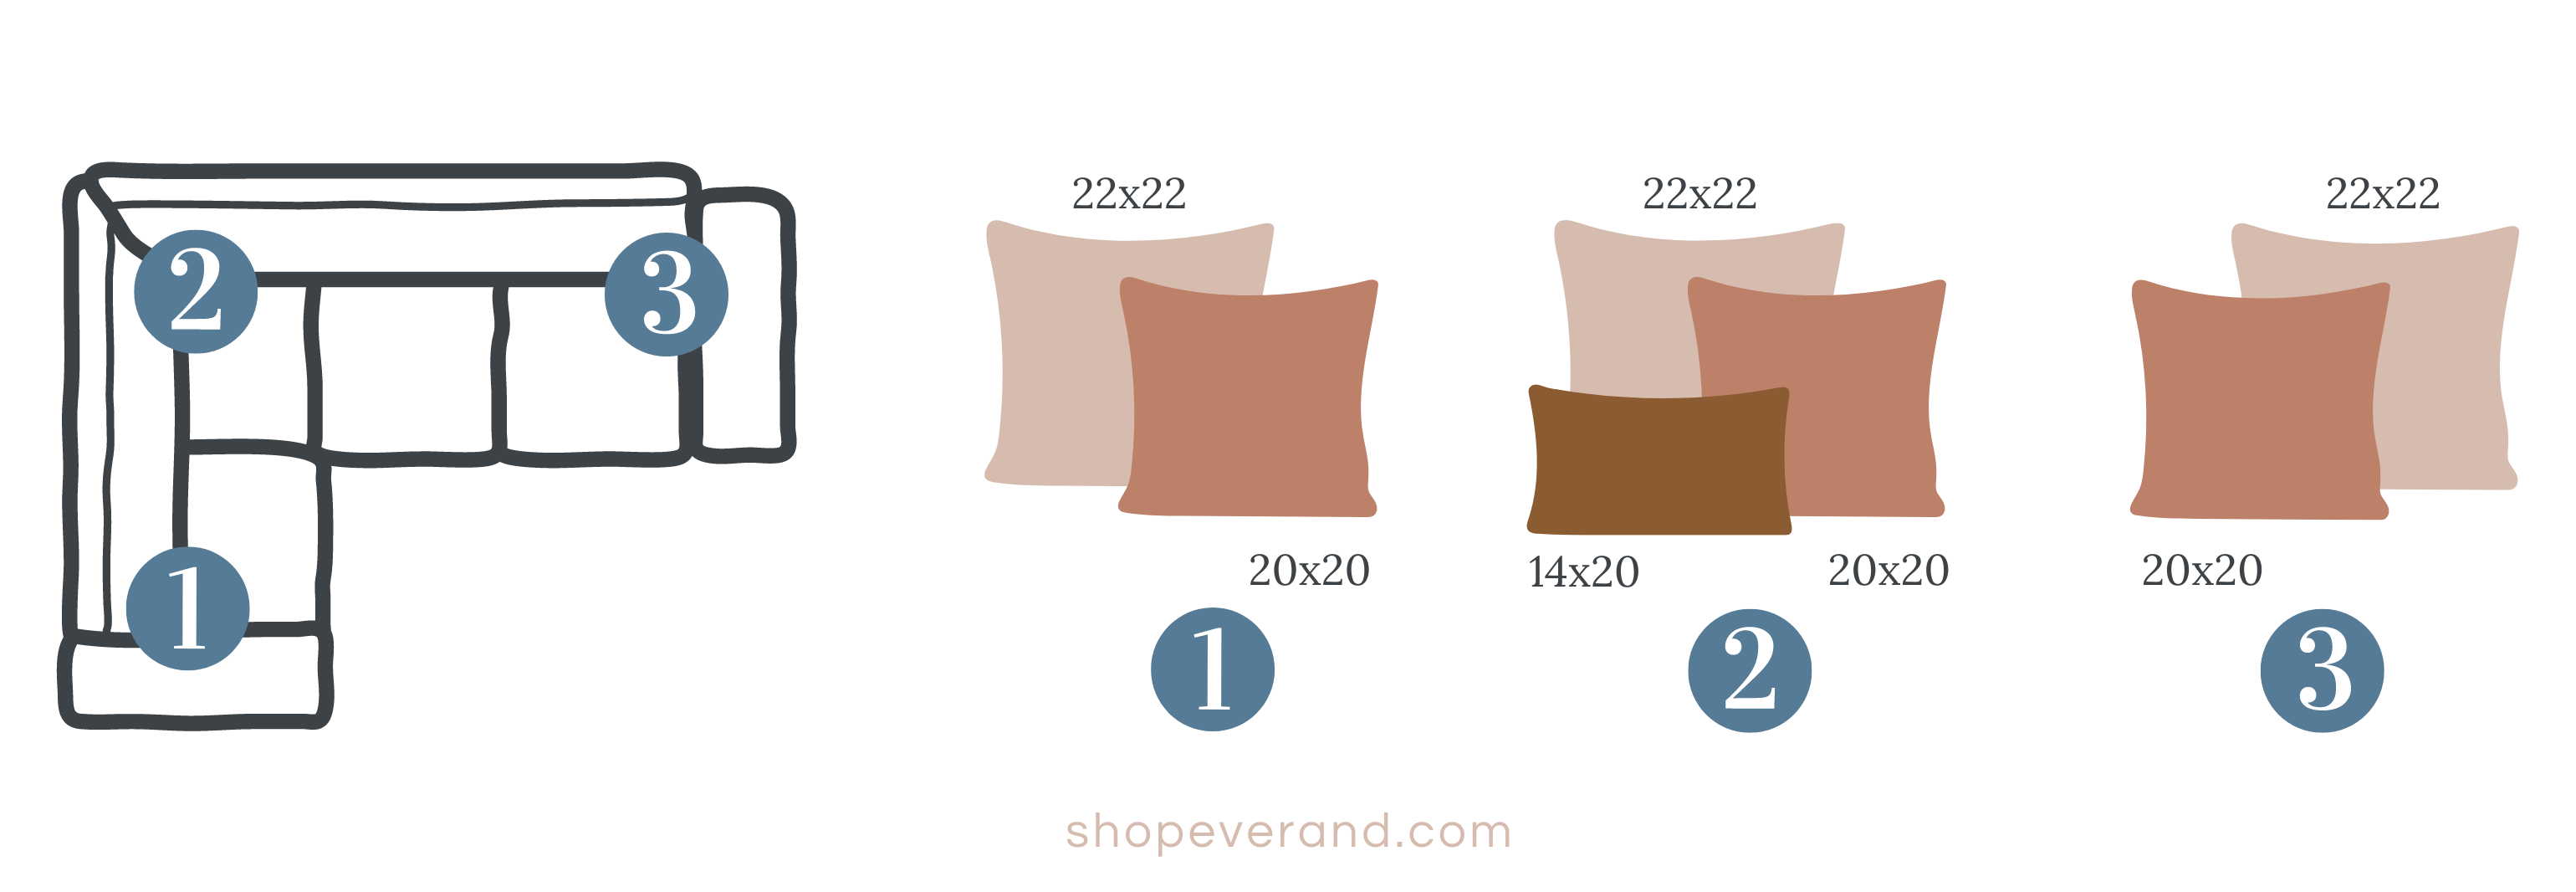 Everand sectional throw pillow formula for 7 pillows